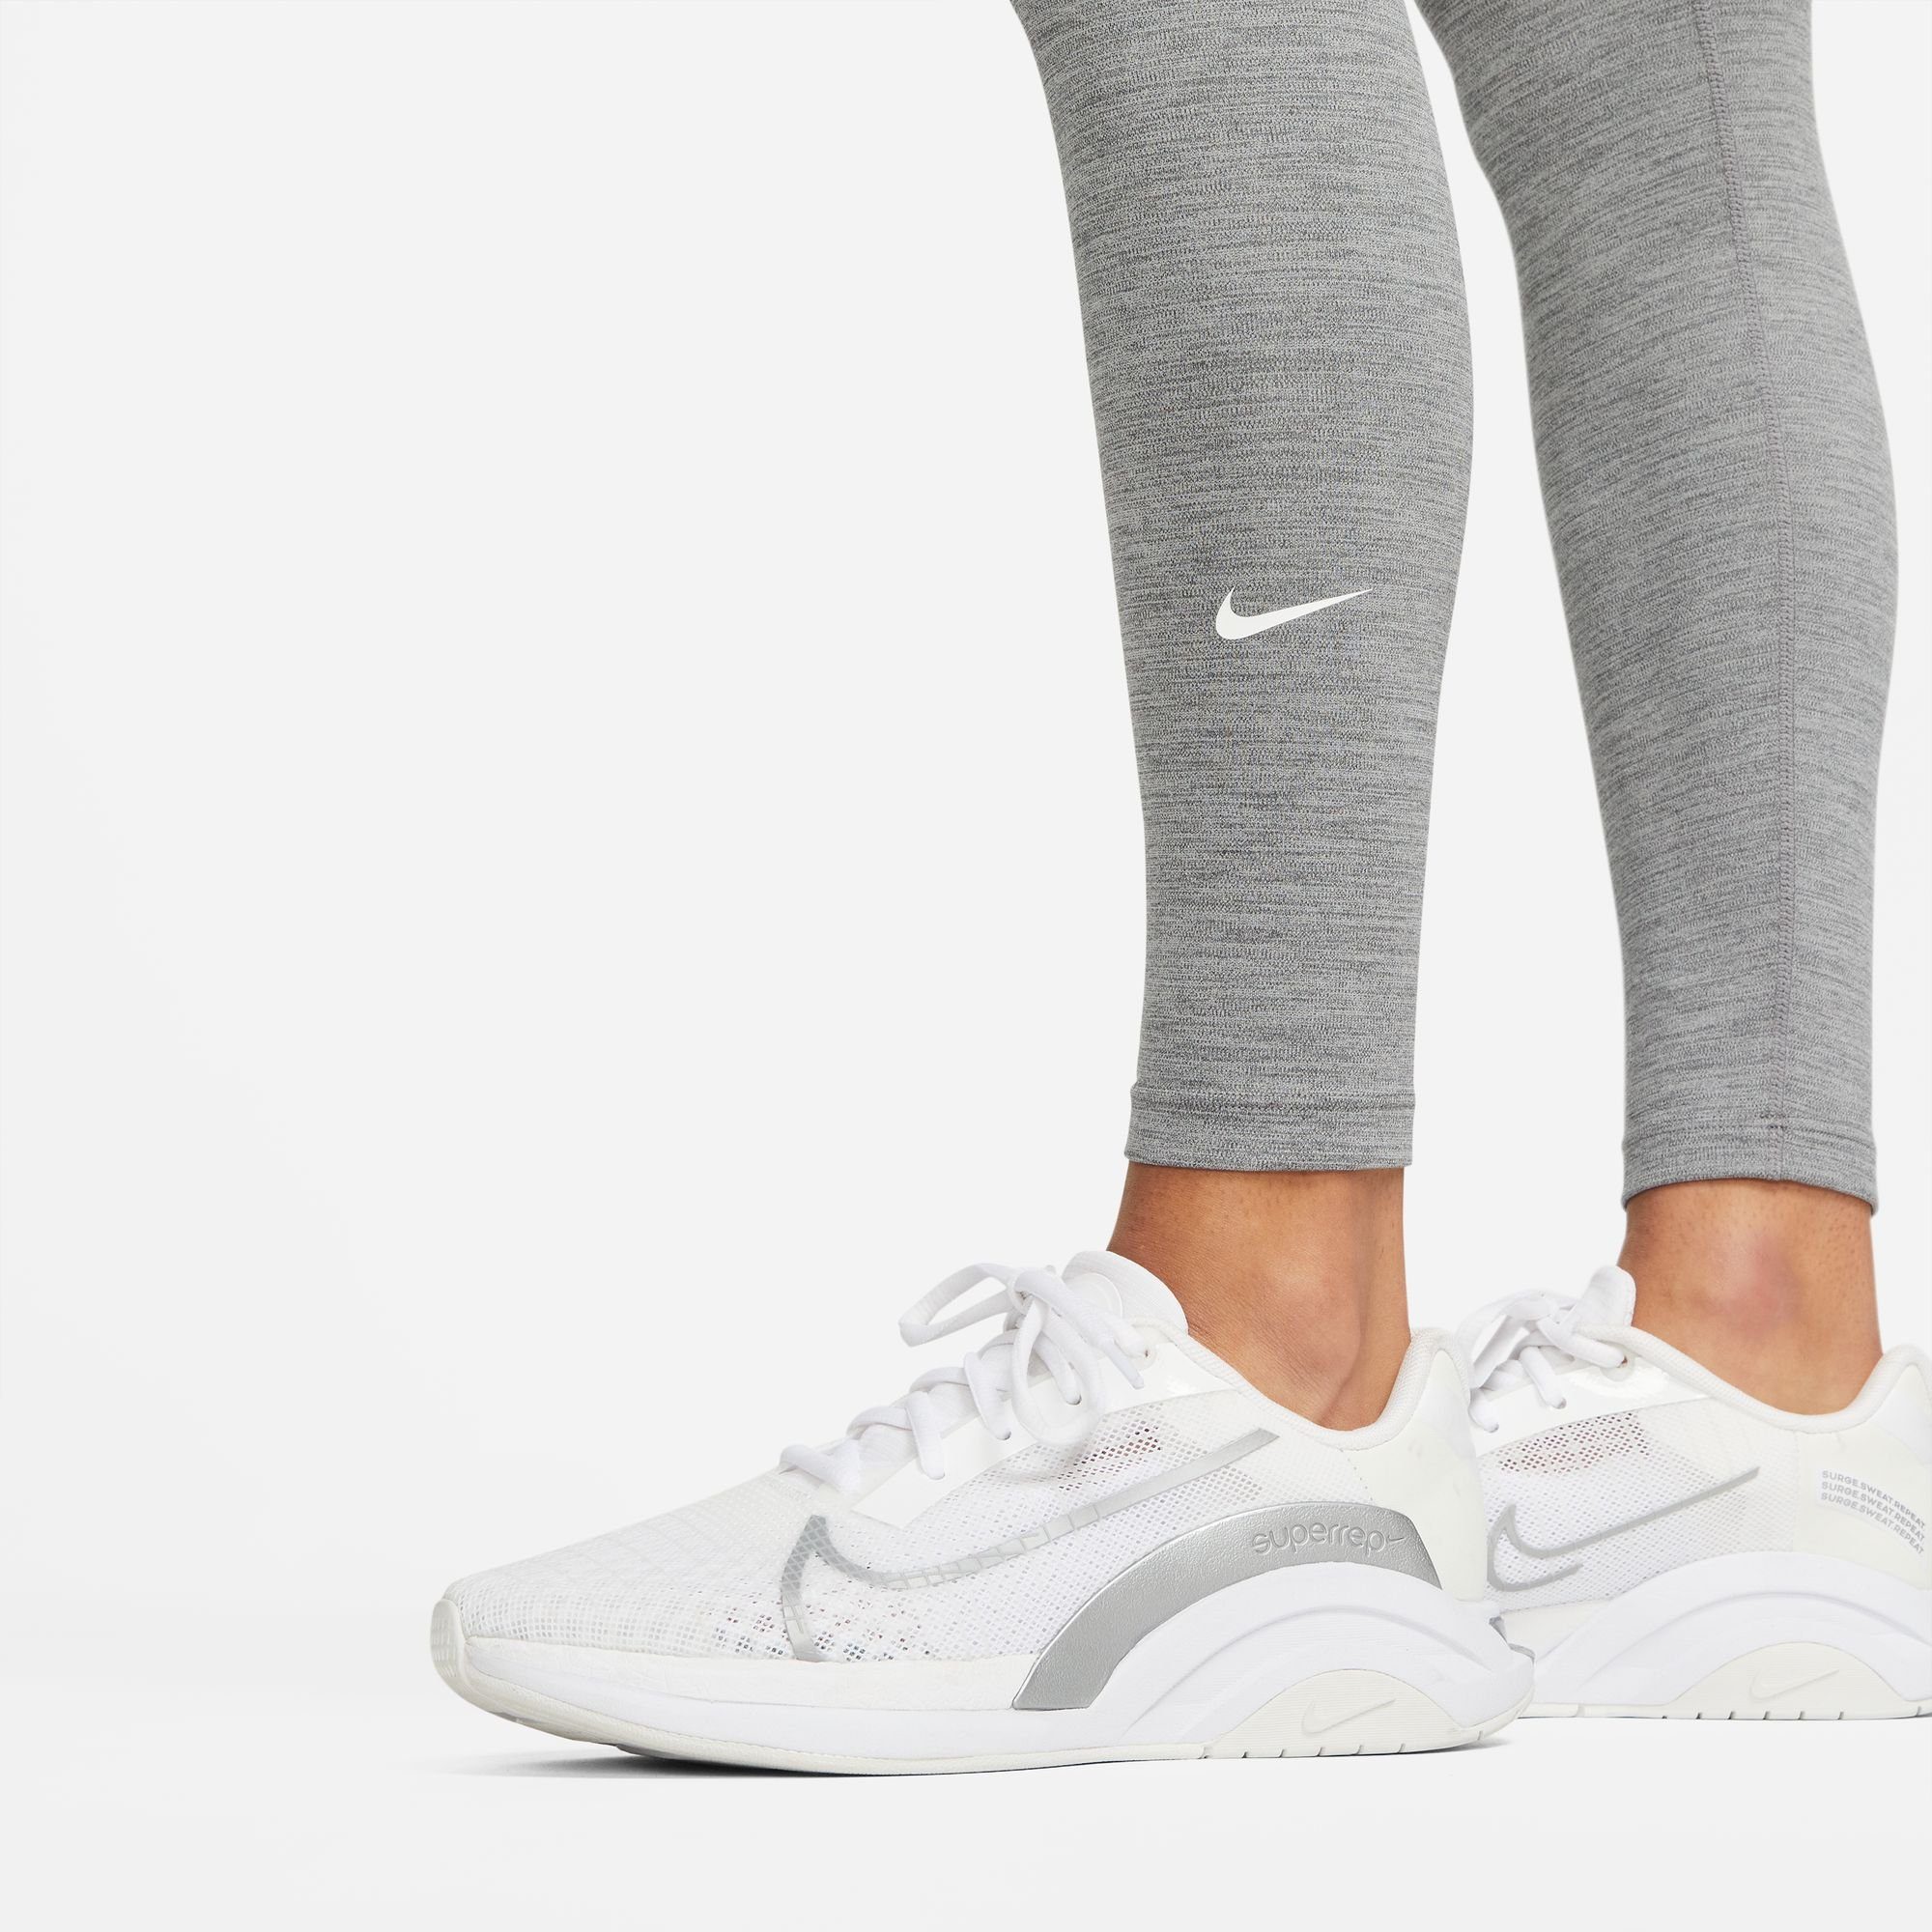 ONE IRON HIGH-RISE Nike Trainingstights LEGGINGS WOMEN'S GREY/HTR/WHITE